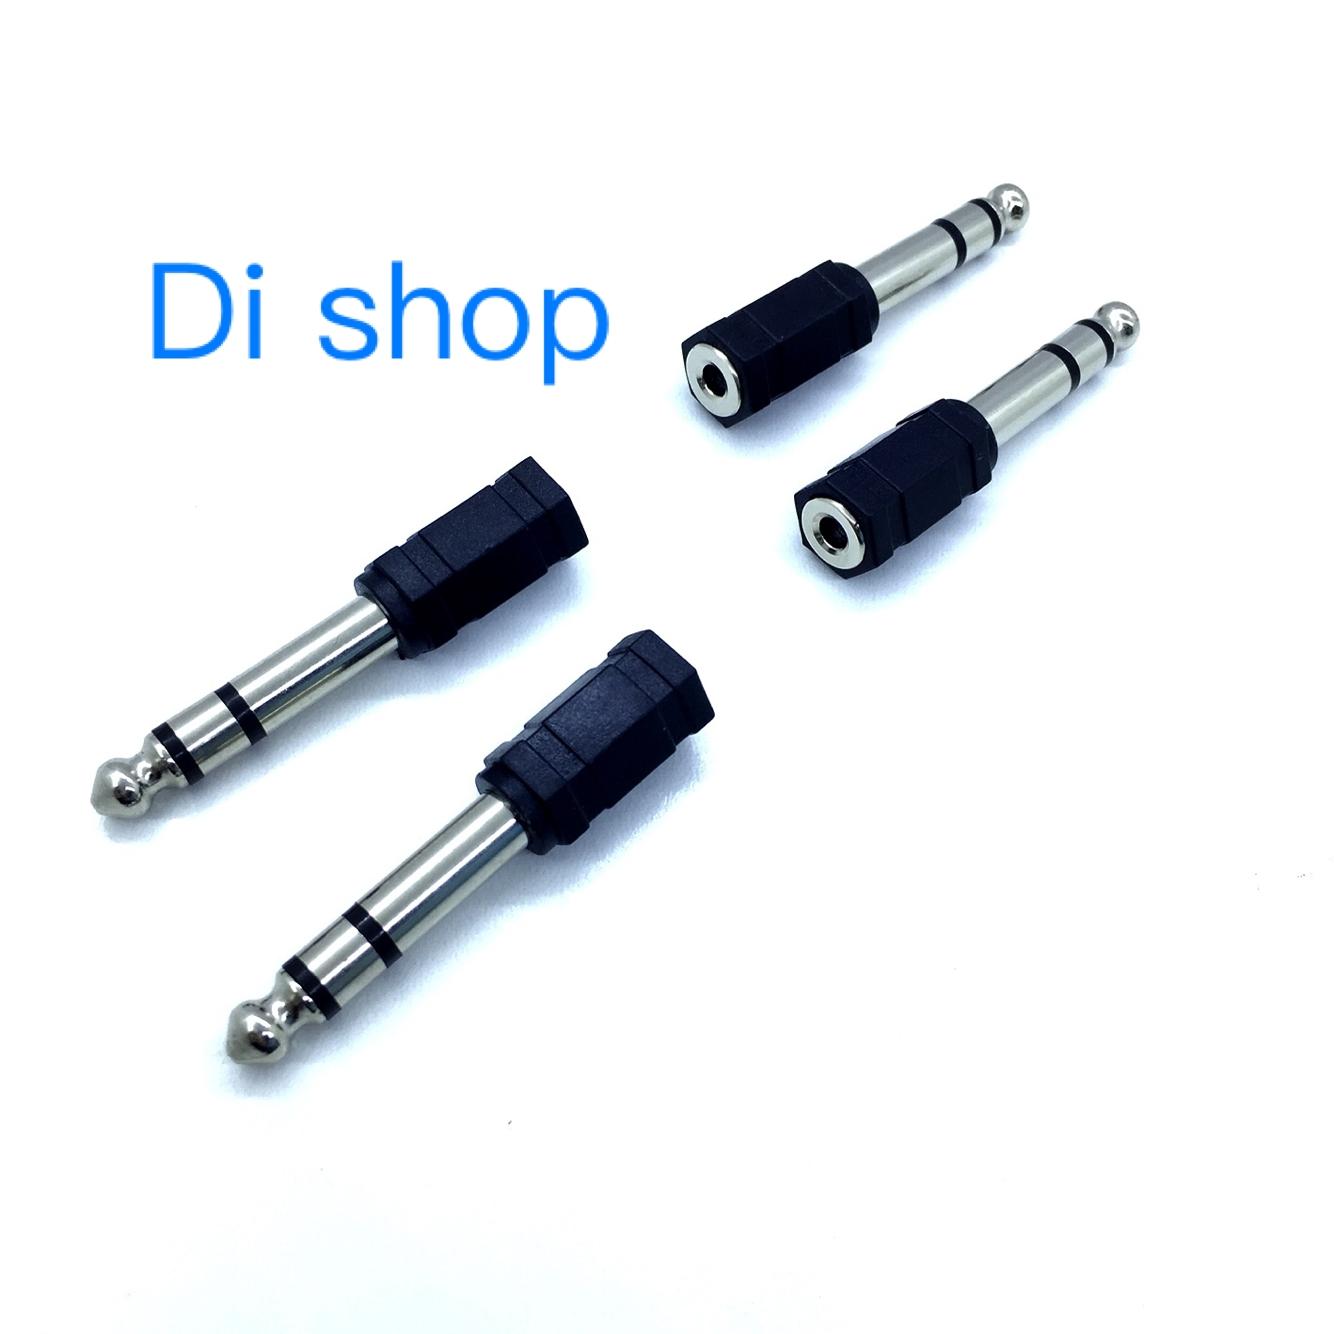 Di shop Audio ตัวแปลงปลั๊กไมค์เป็นแจ็คTRแพ็ค4ตัว3.5mm Stereo Jack To 1/4